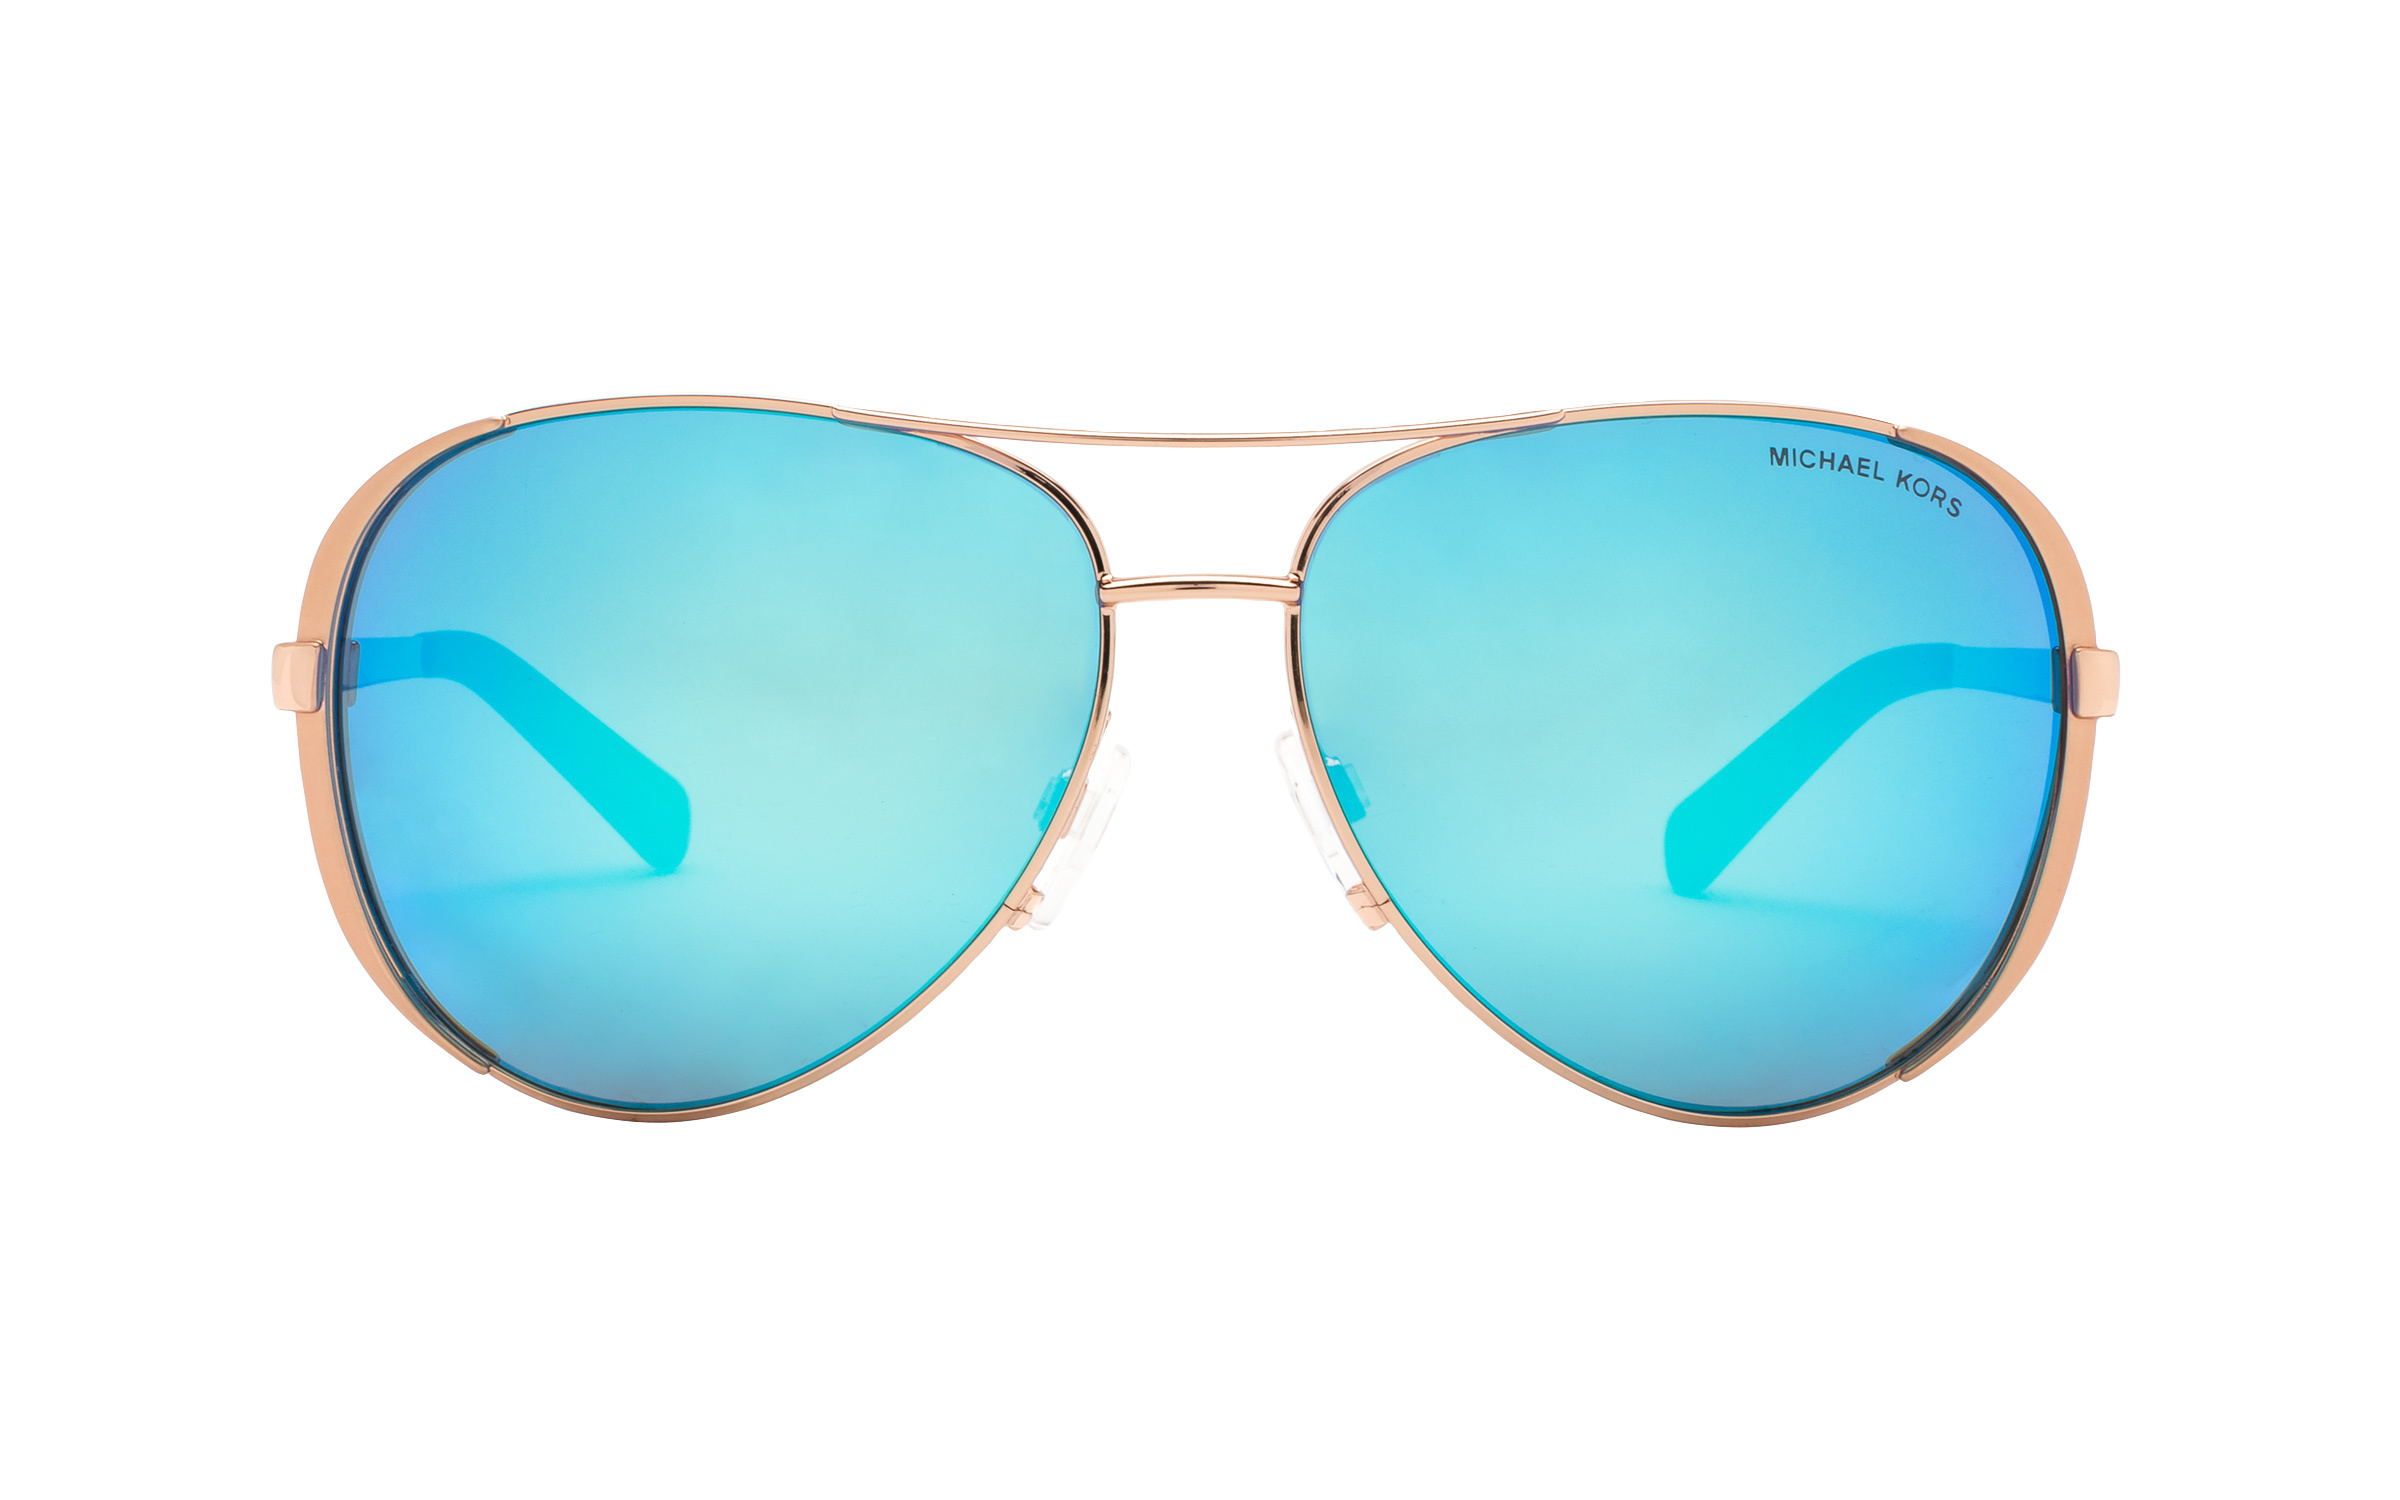 Michael Kors Sunglasses | 2 pairs for 